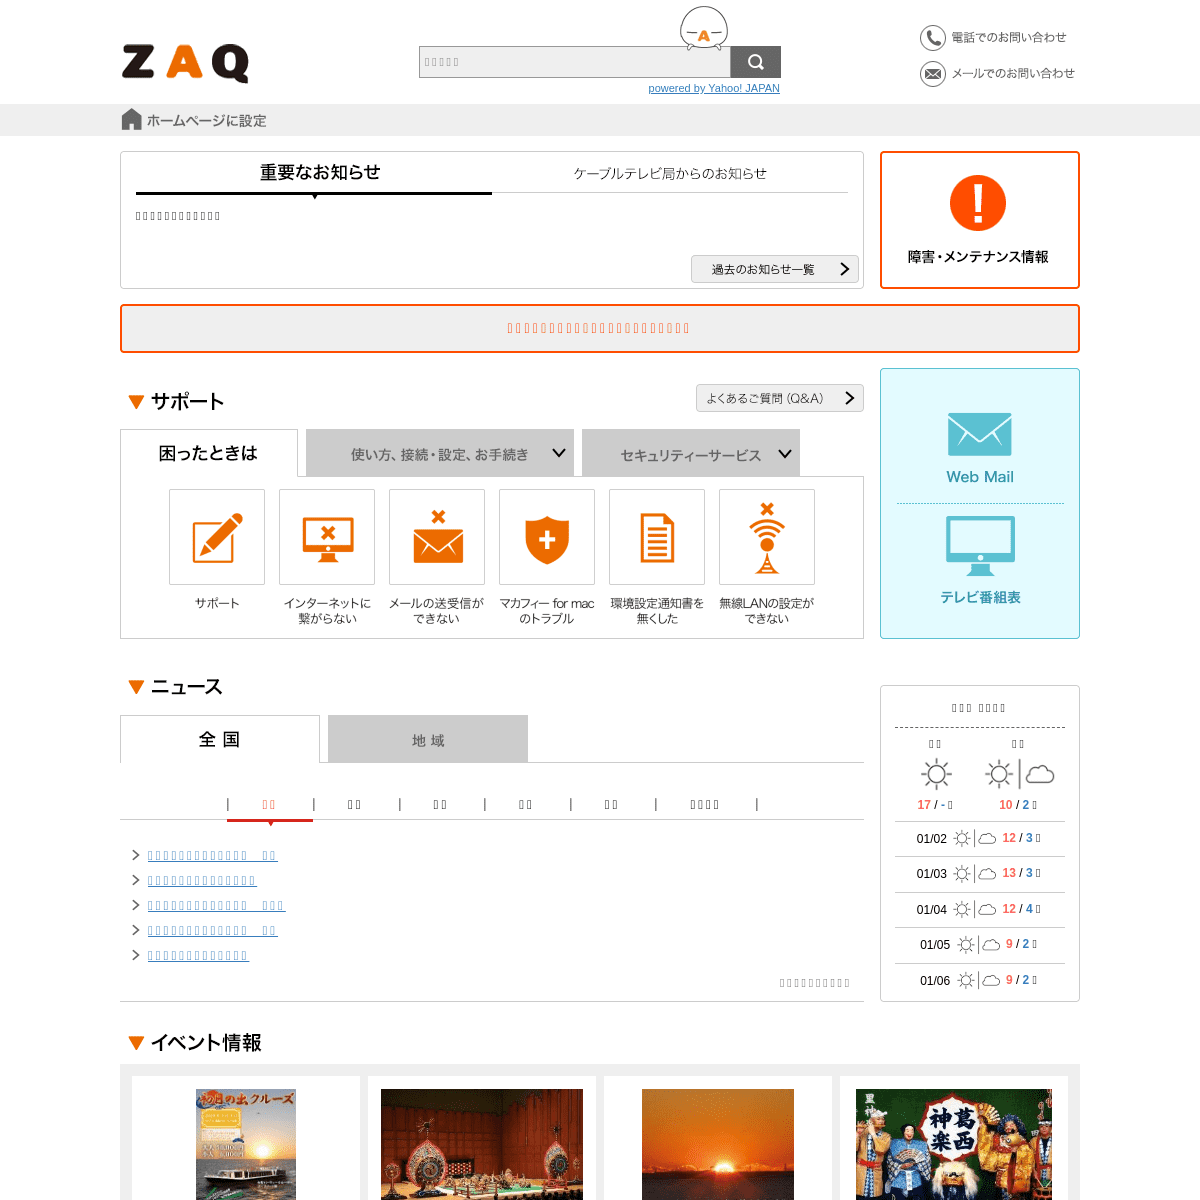 A complete backup of zaq.ne.jp